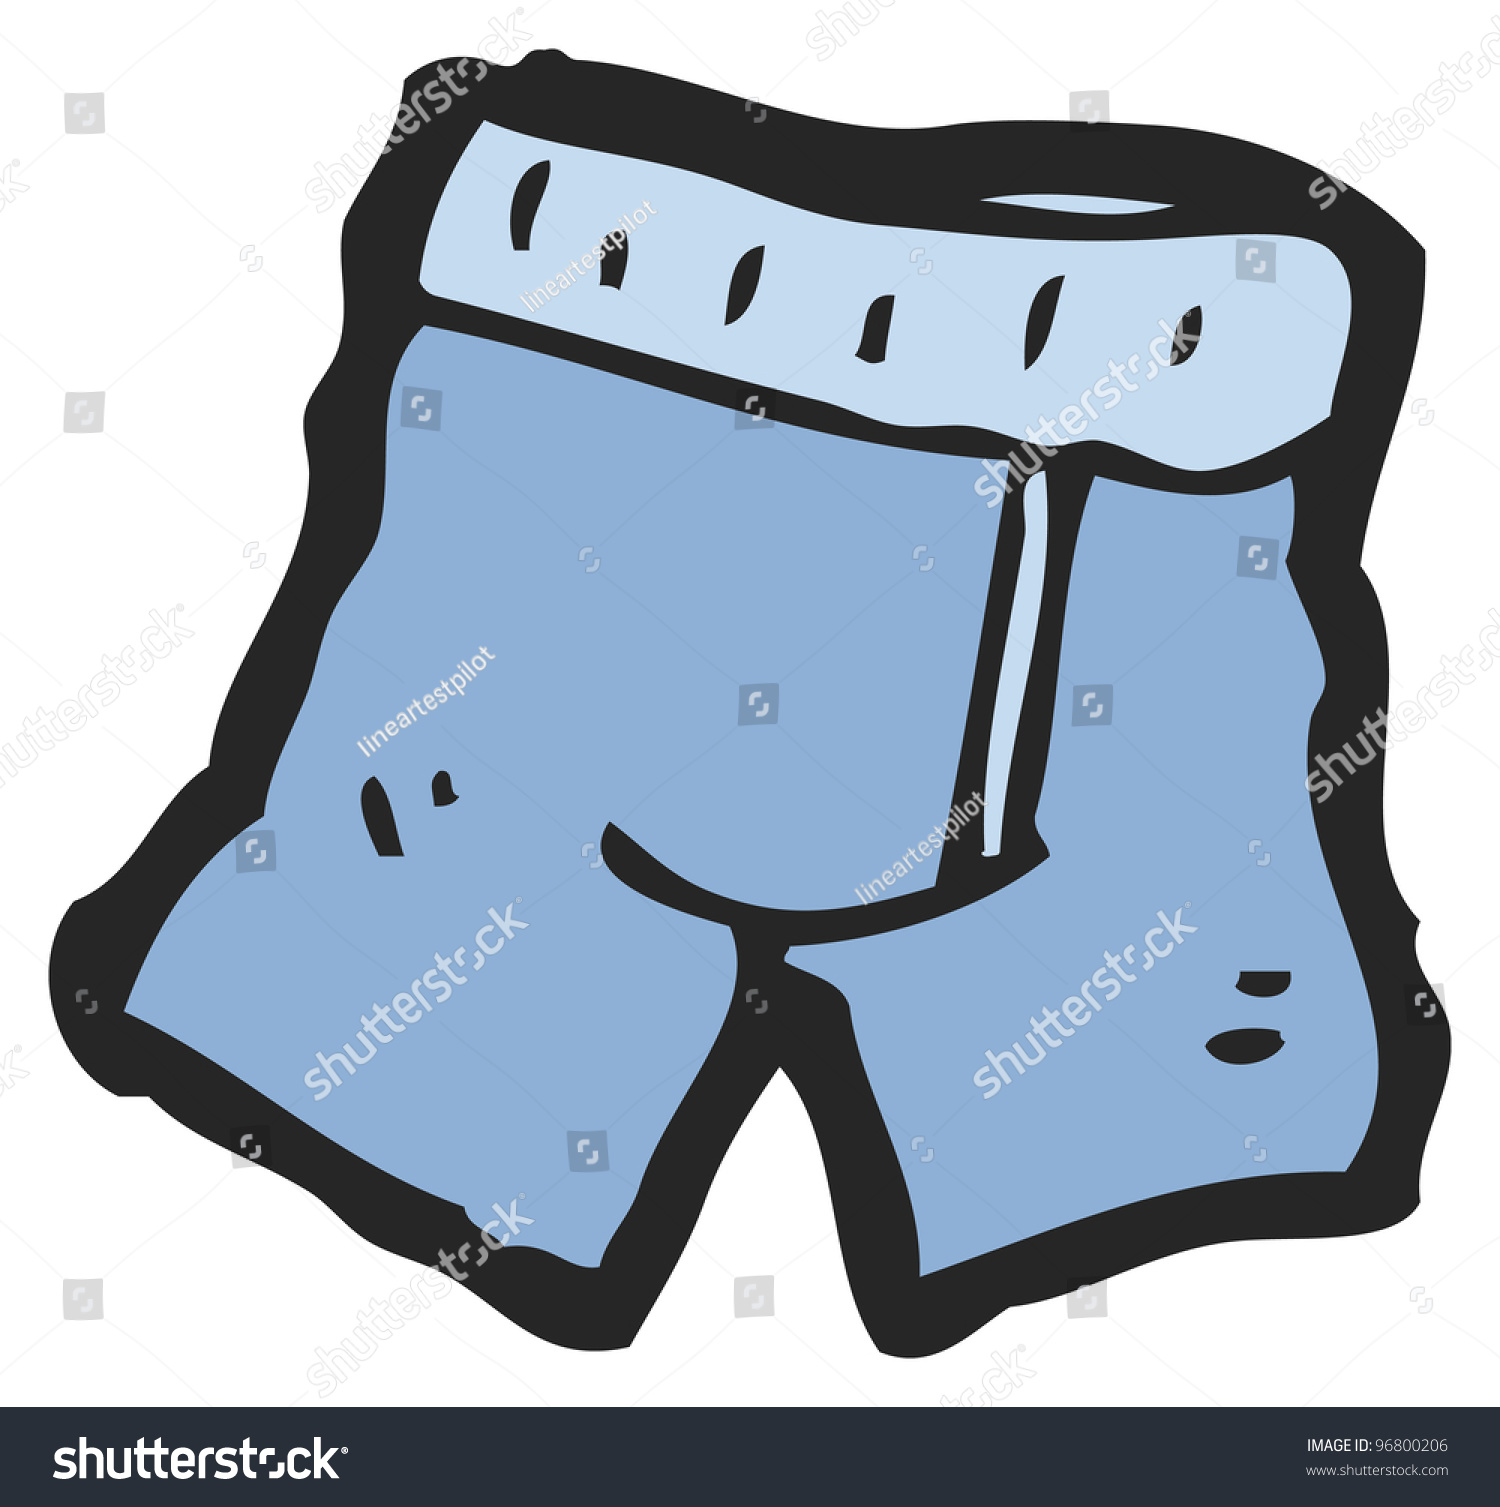 Cartoon Underwear, Stock Photo 96800206 : Shutterstock